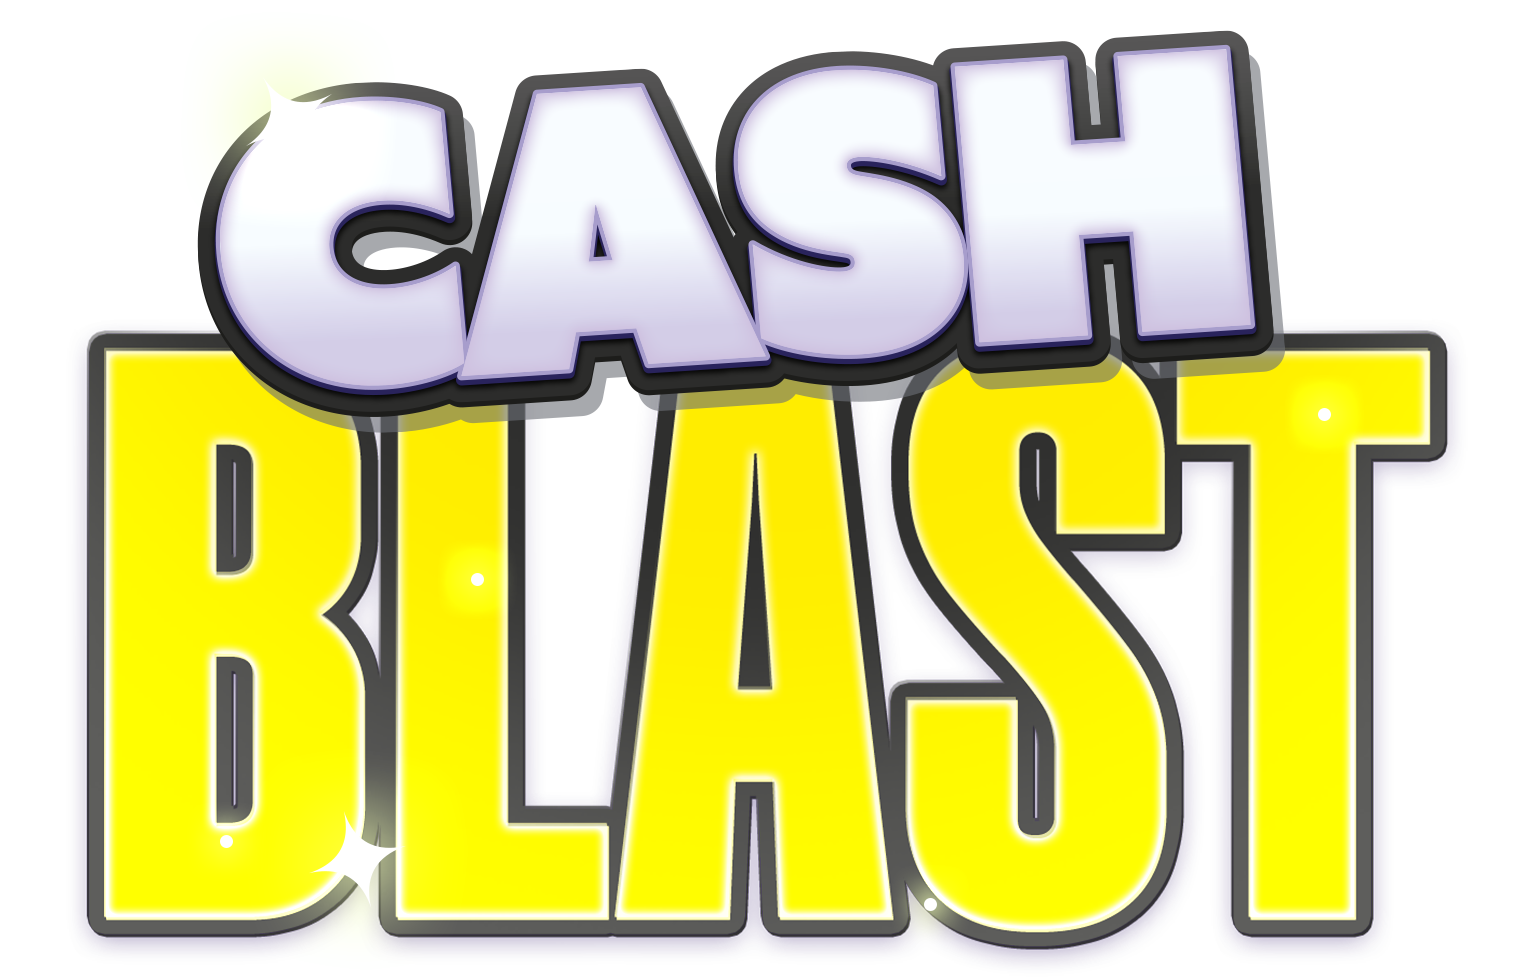 Cash Blast